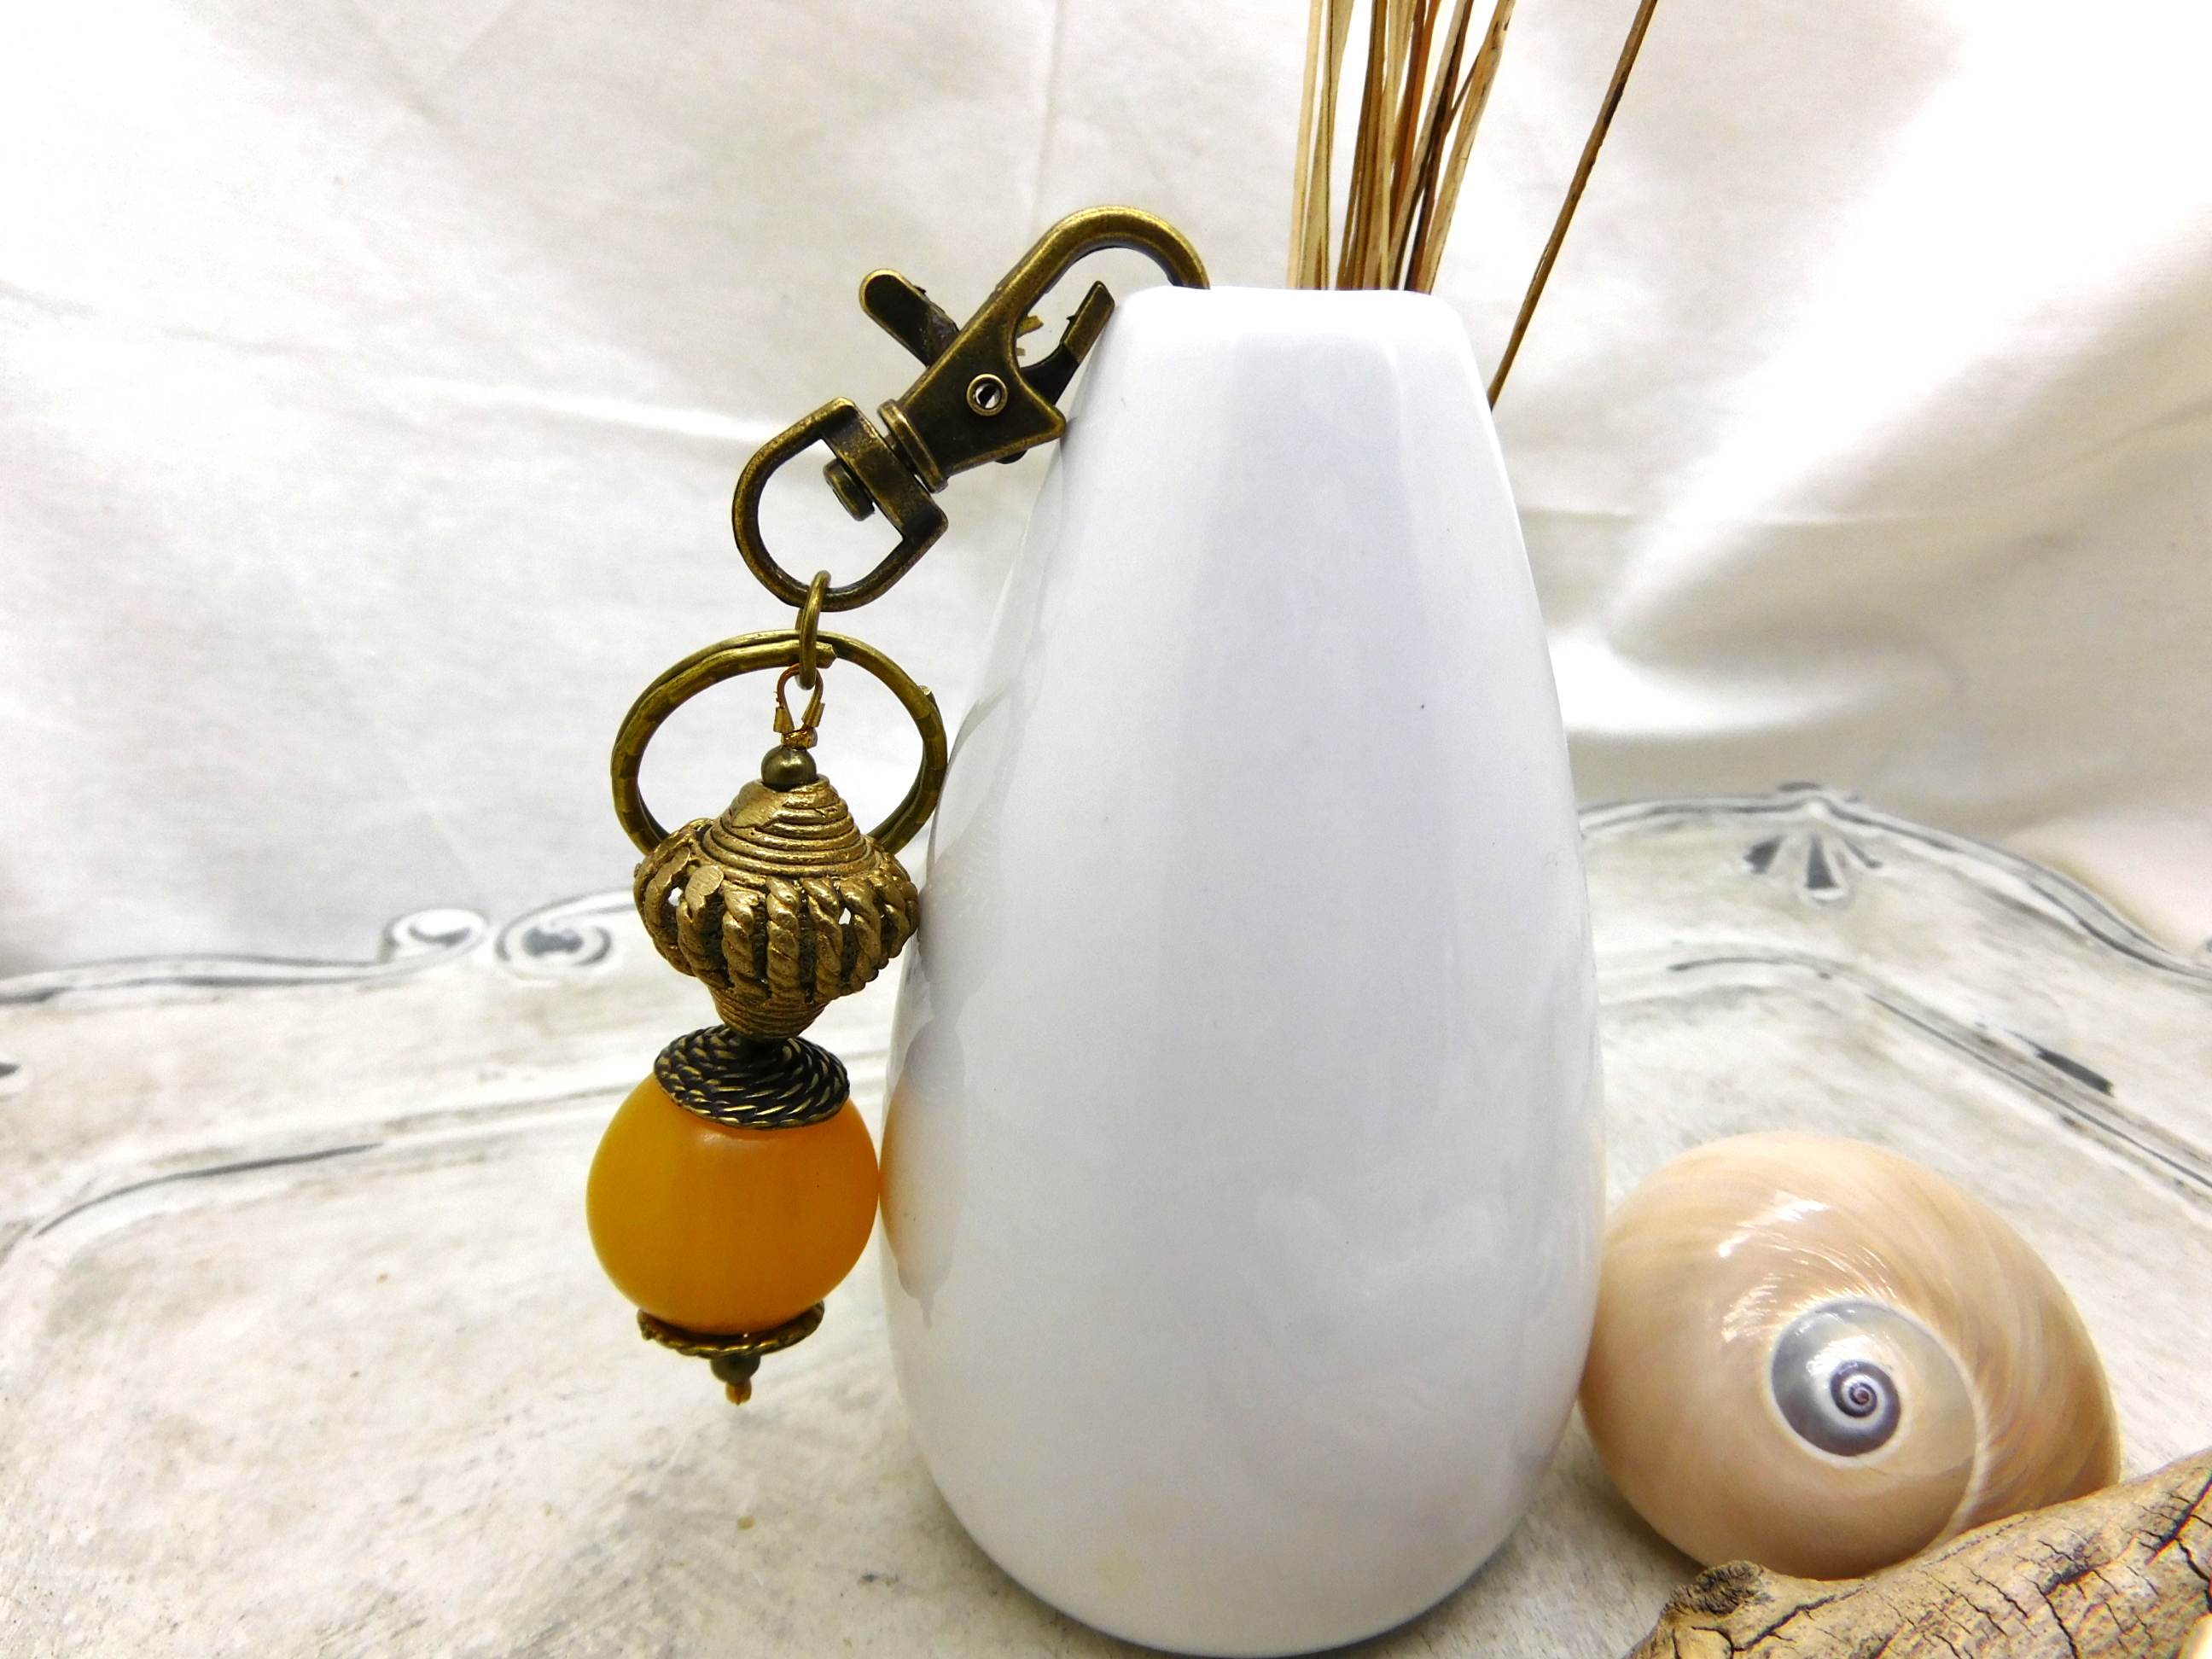 keychain / bag charm with resin amber bead and handmade brass bead